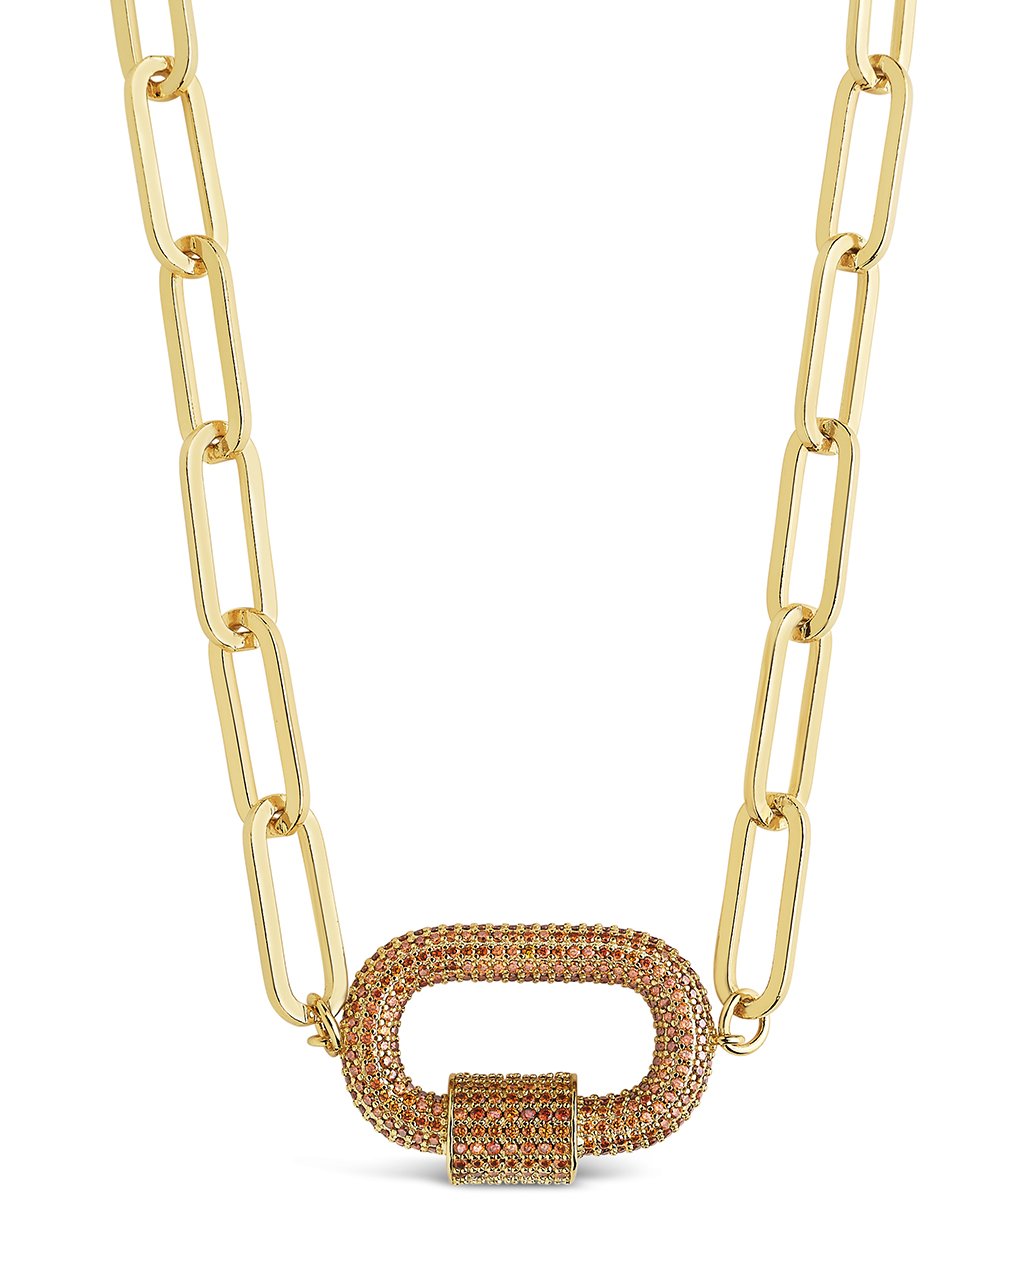 Pave CZ Carabiner Linked Lock Necklace Necklace Sterling Forever Gold Red 